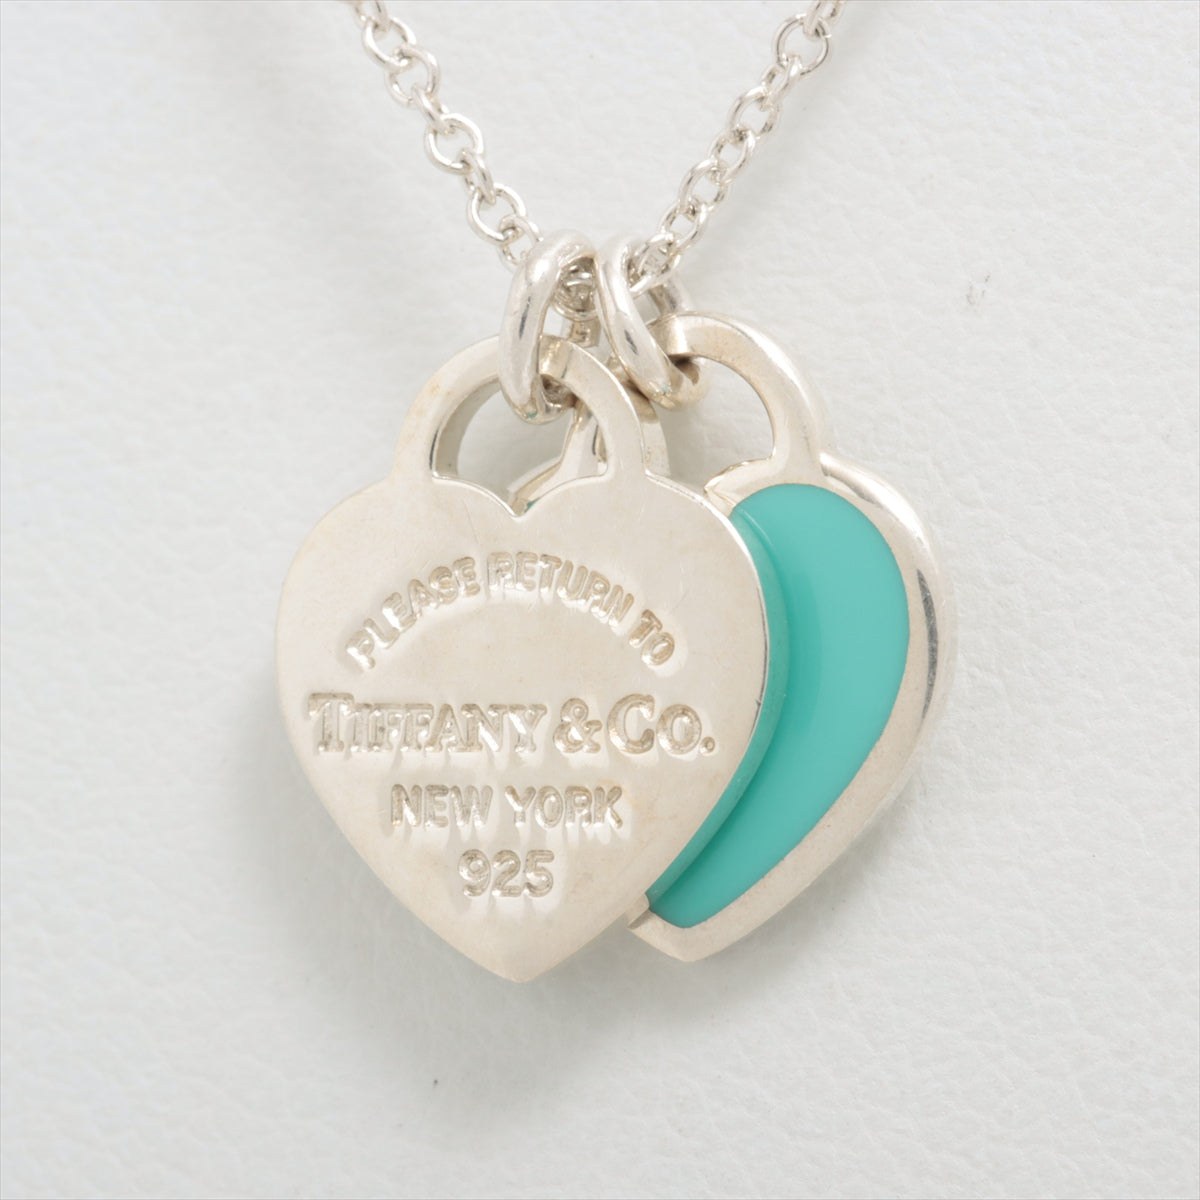 Tiffany Return To Tiffany Mini Double Heart Tag Necklace 925 2.6g Silver